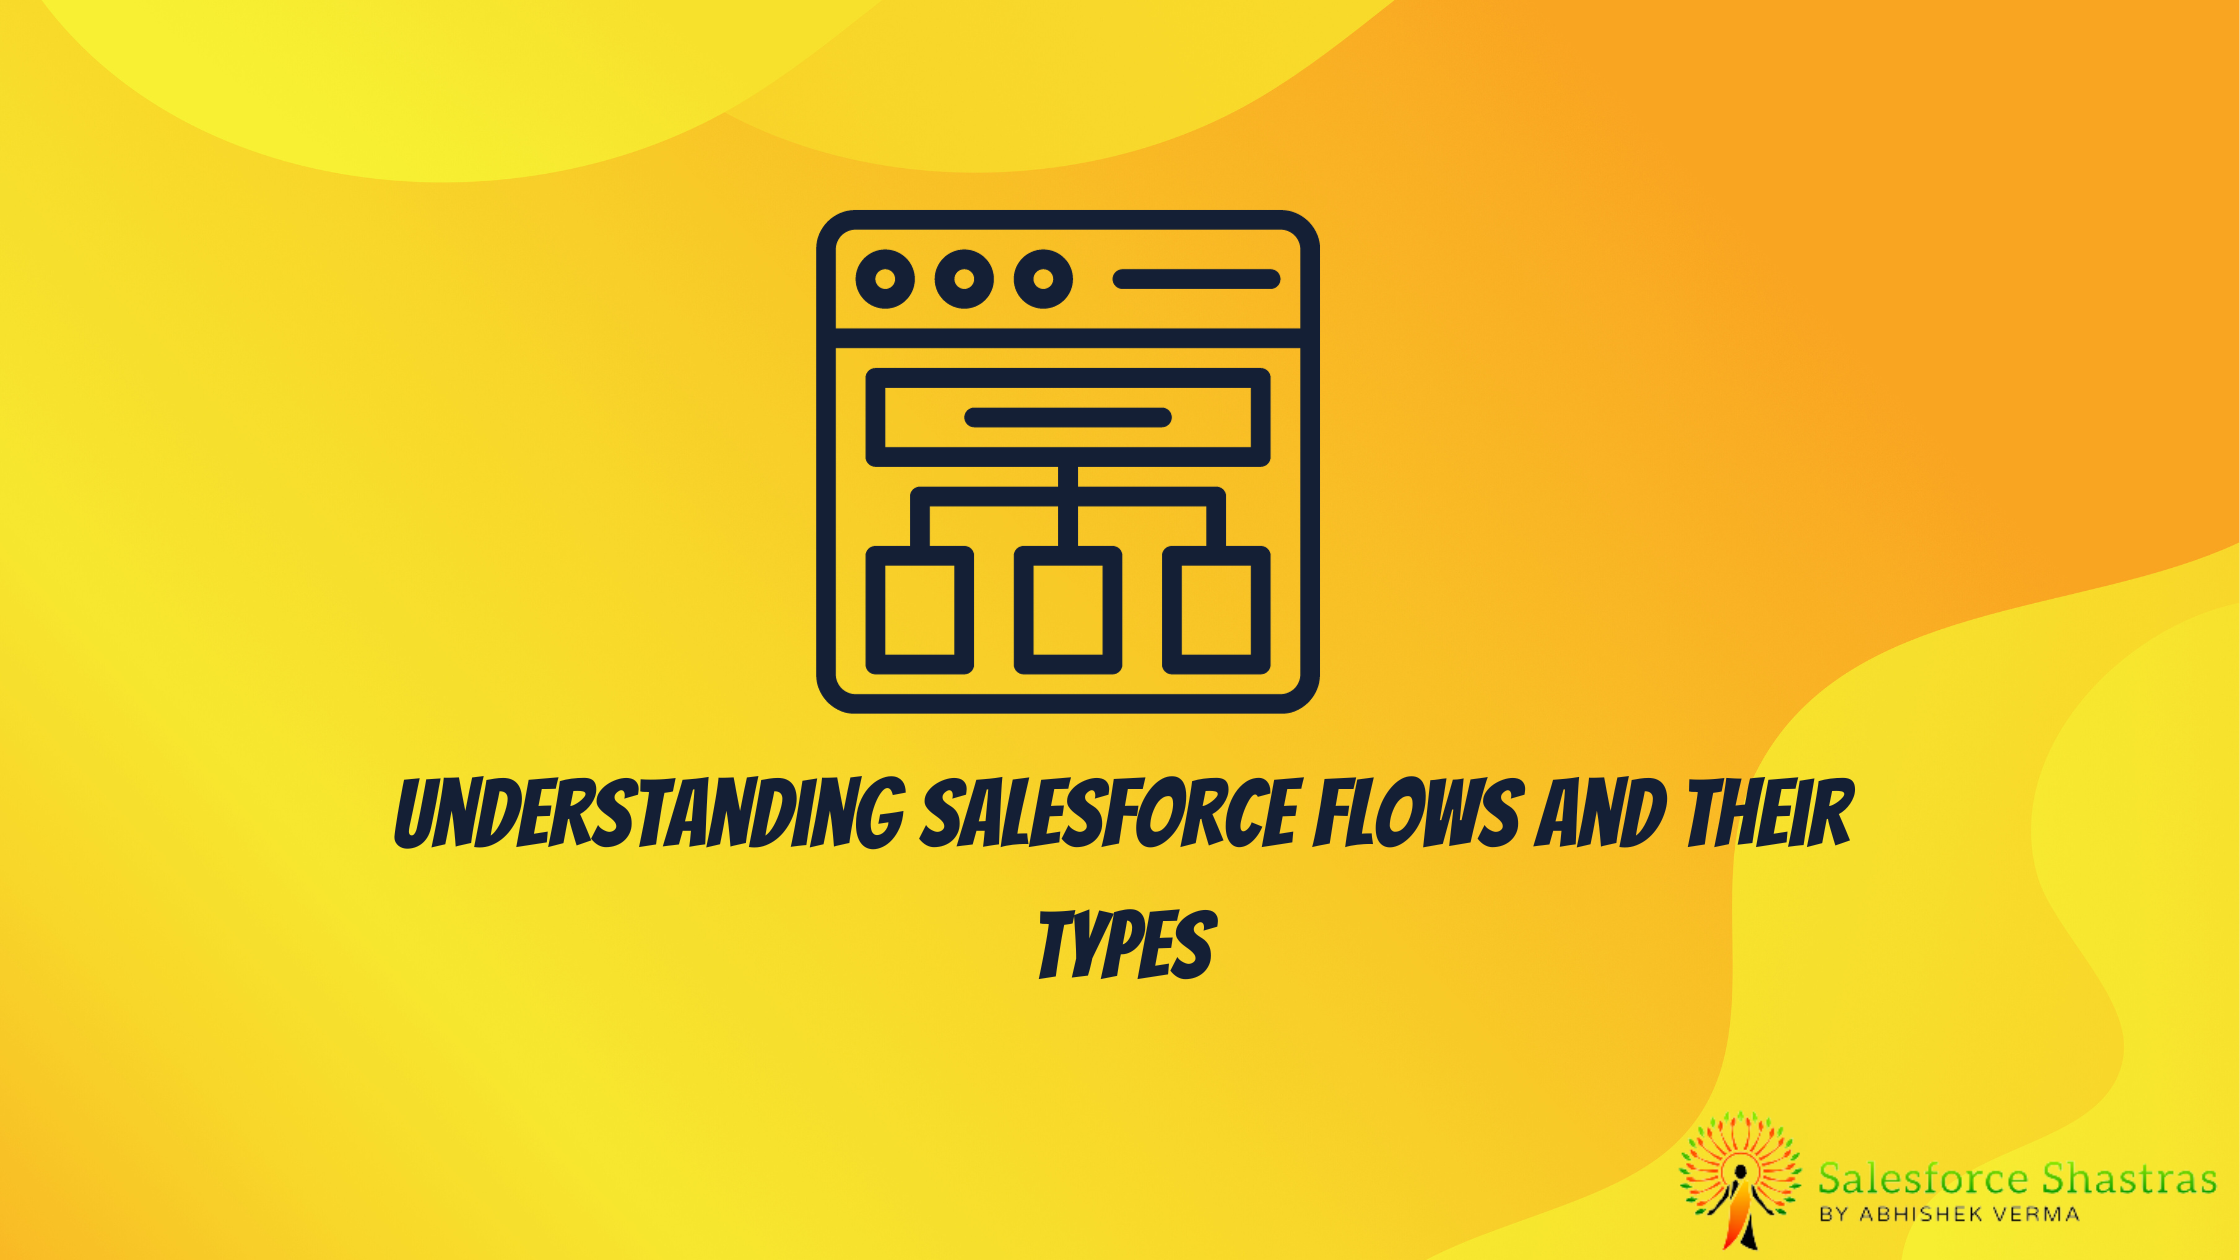 Understanding Salesforce Flows and Their Types